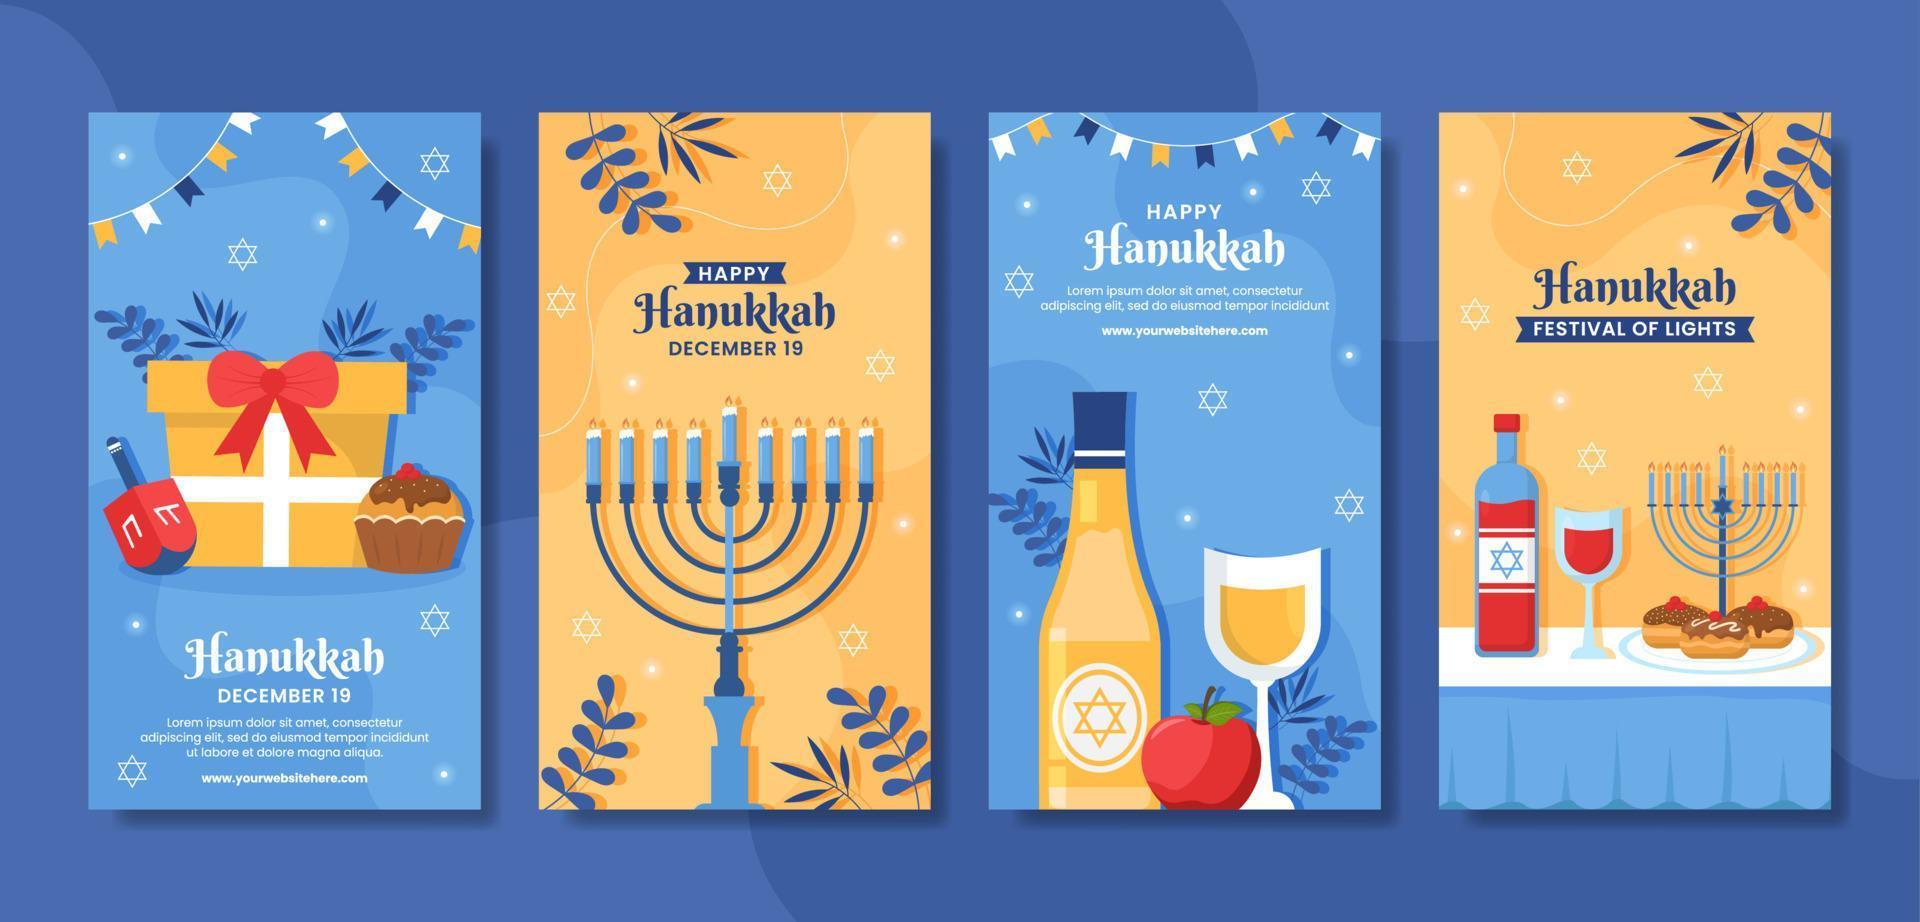 Hanukkah Jewish Holiday Social Media Stories Flat Cartoon Hand Drawn Templates Illustration vector